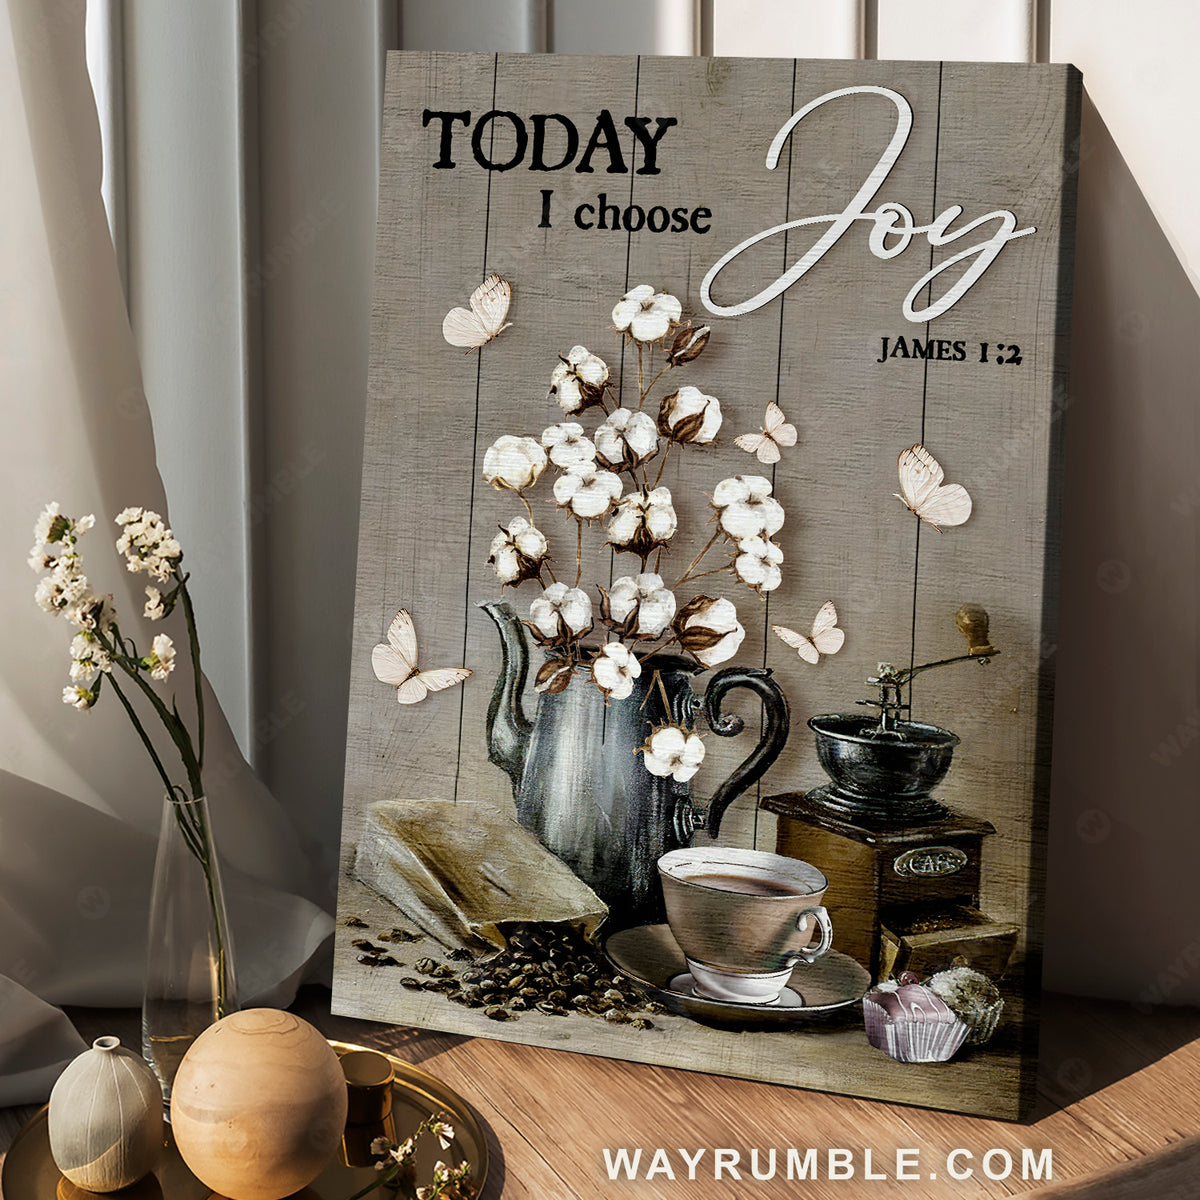 Choose Joy - 4x6 Canvas – Canvases for Christ